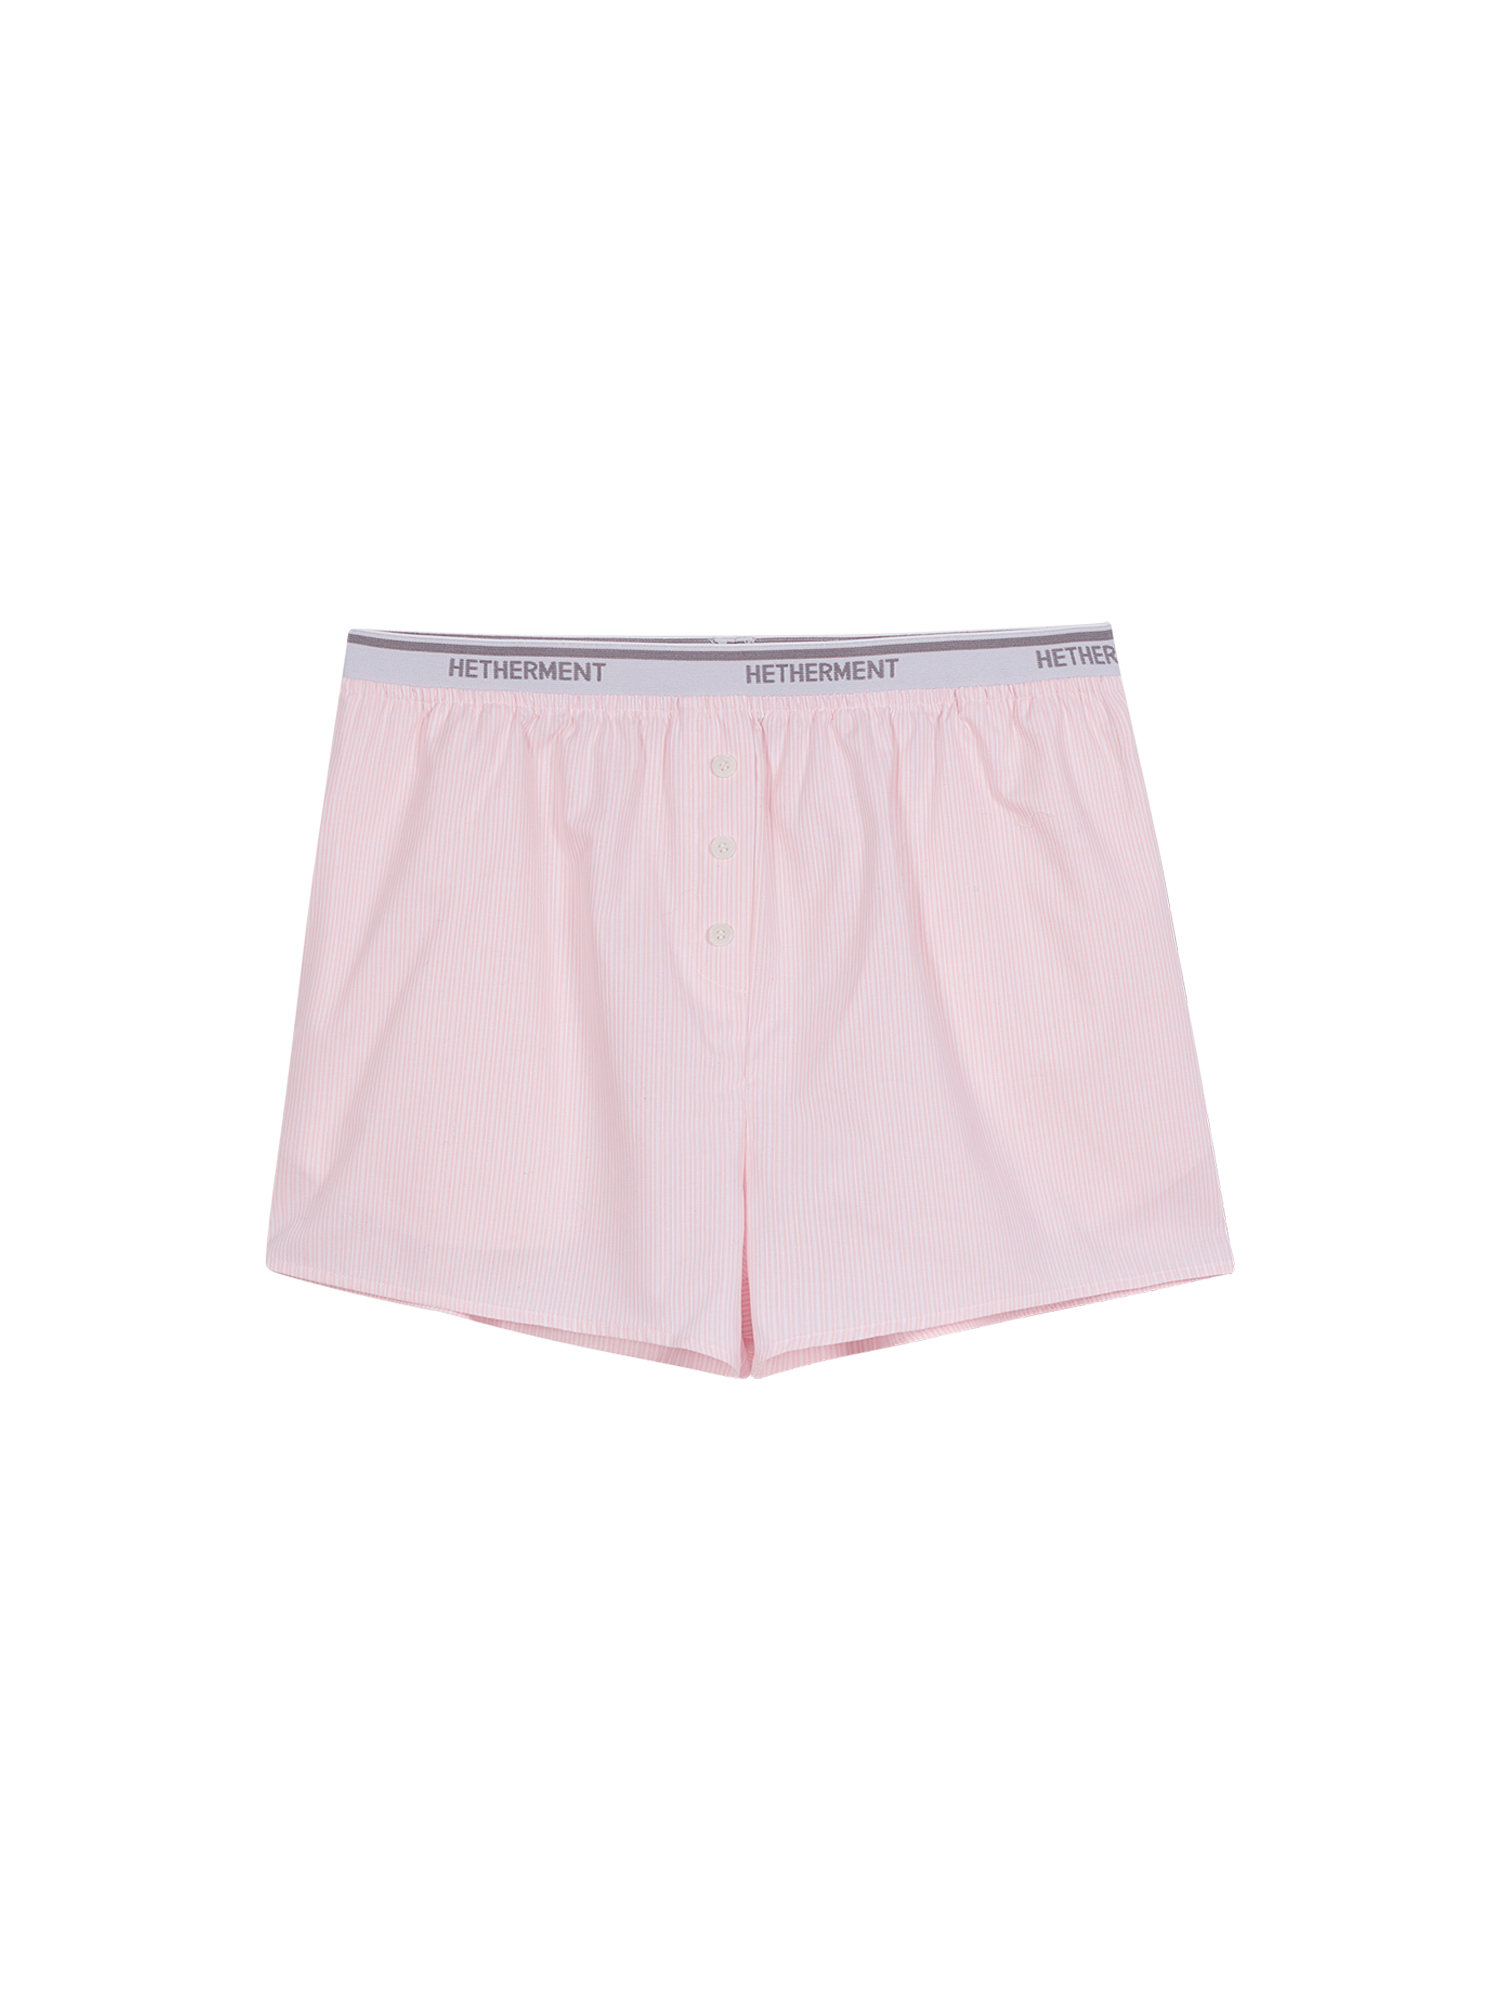 Bedtime Bending Shorts - Pink Stripe